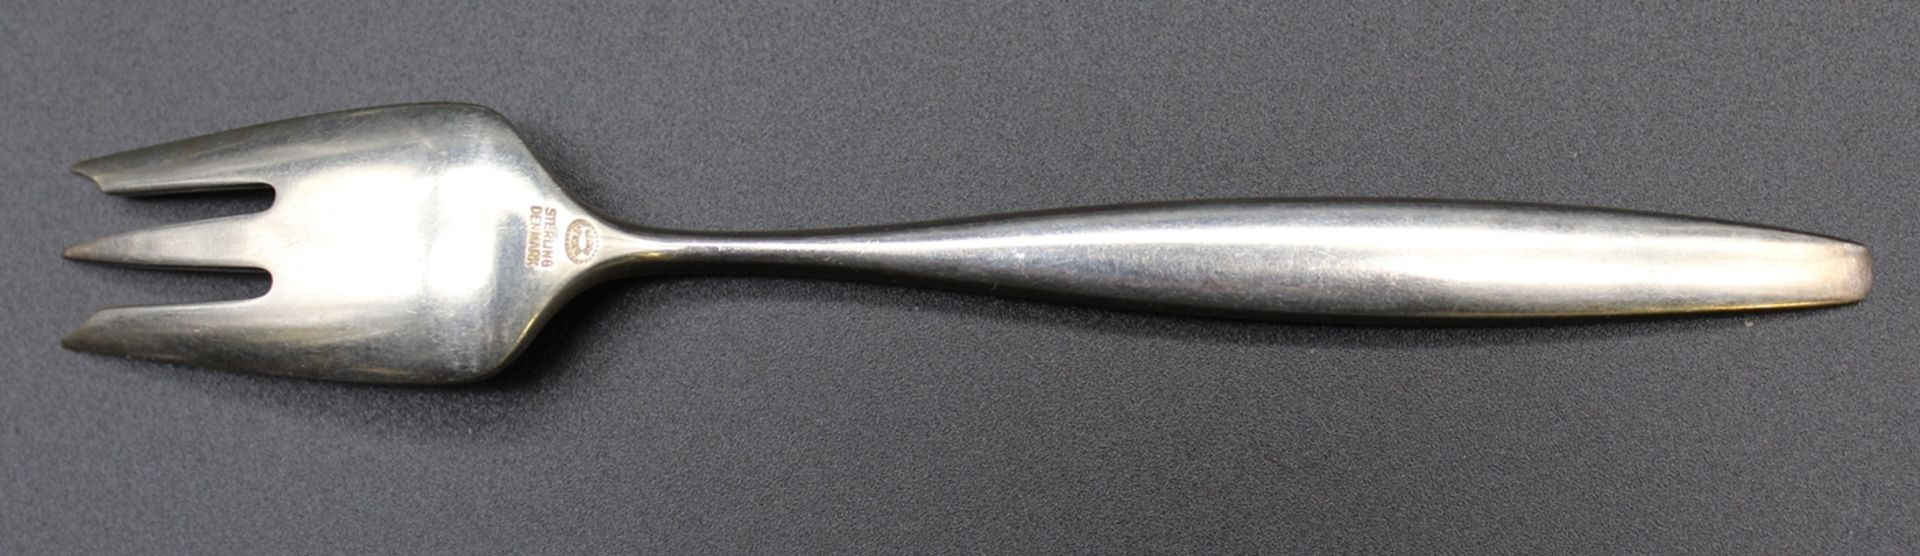 4x Kuchengabeln, Georg Jensen, 925er Silber, Form Cypress, ca. 116gr., L-14,8cm. - Image 3 of 4